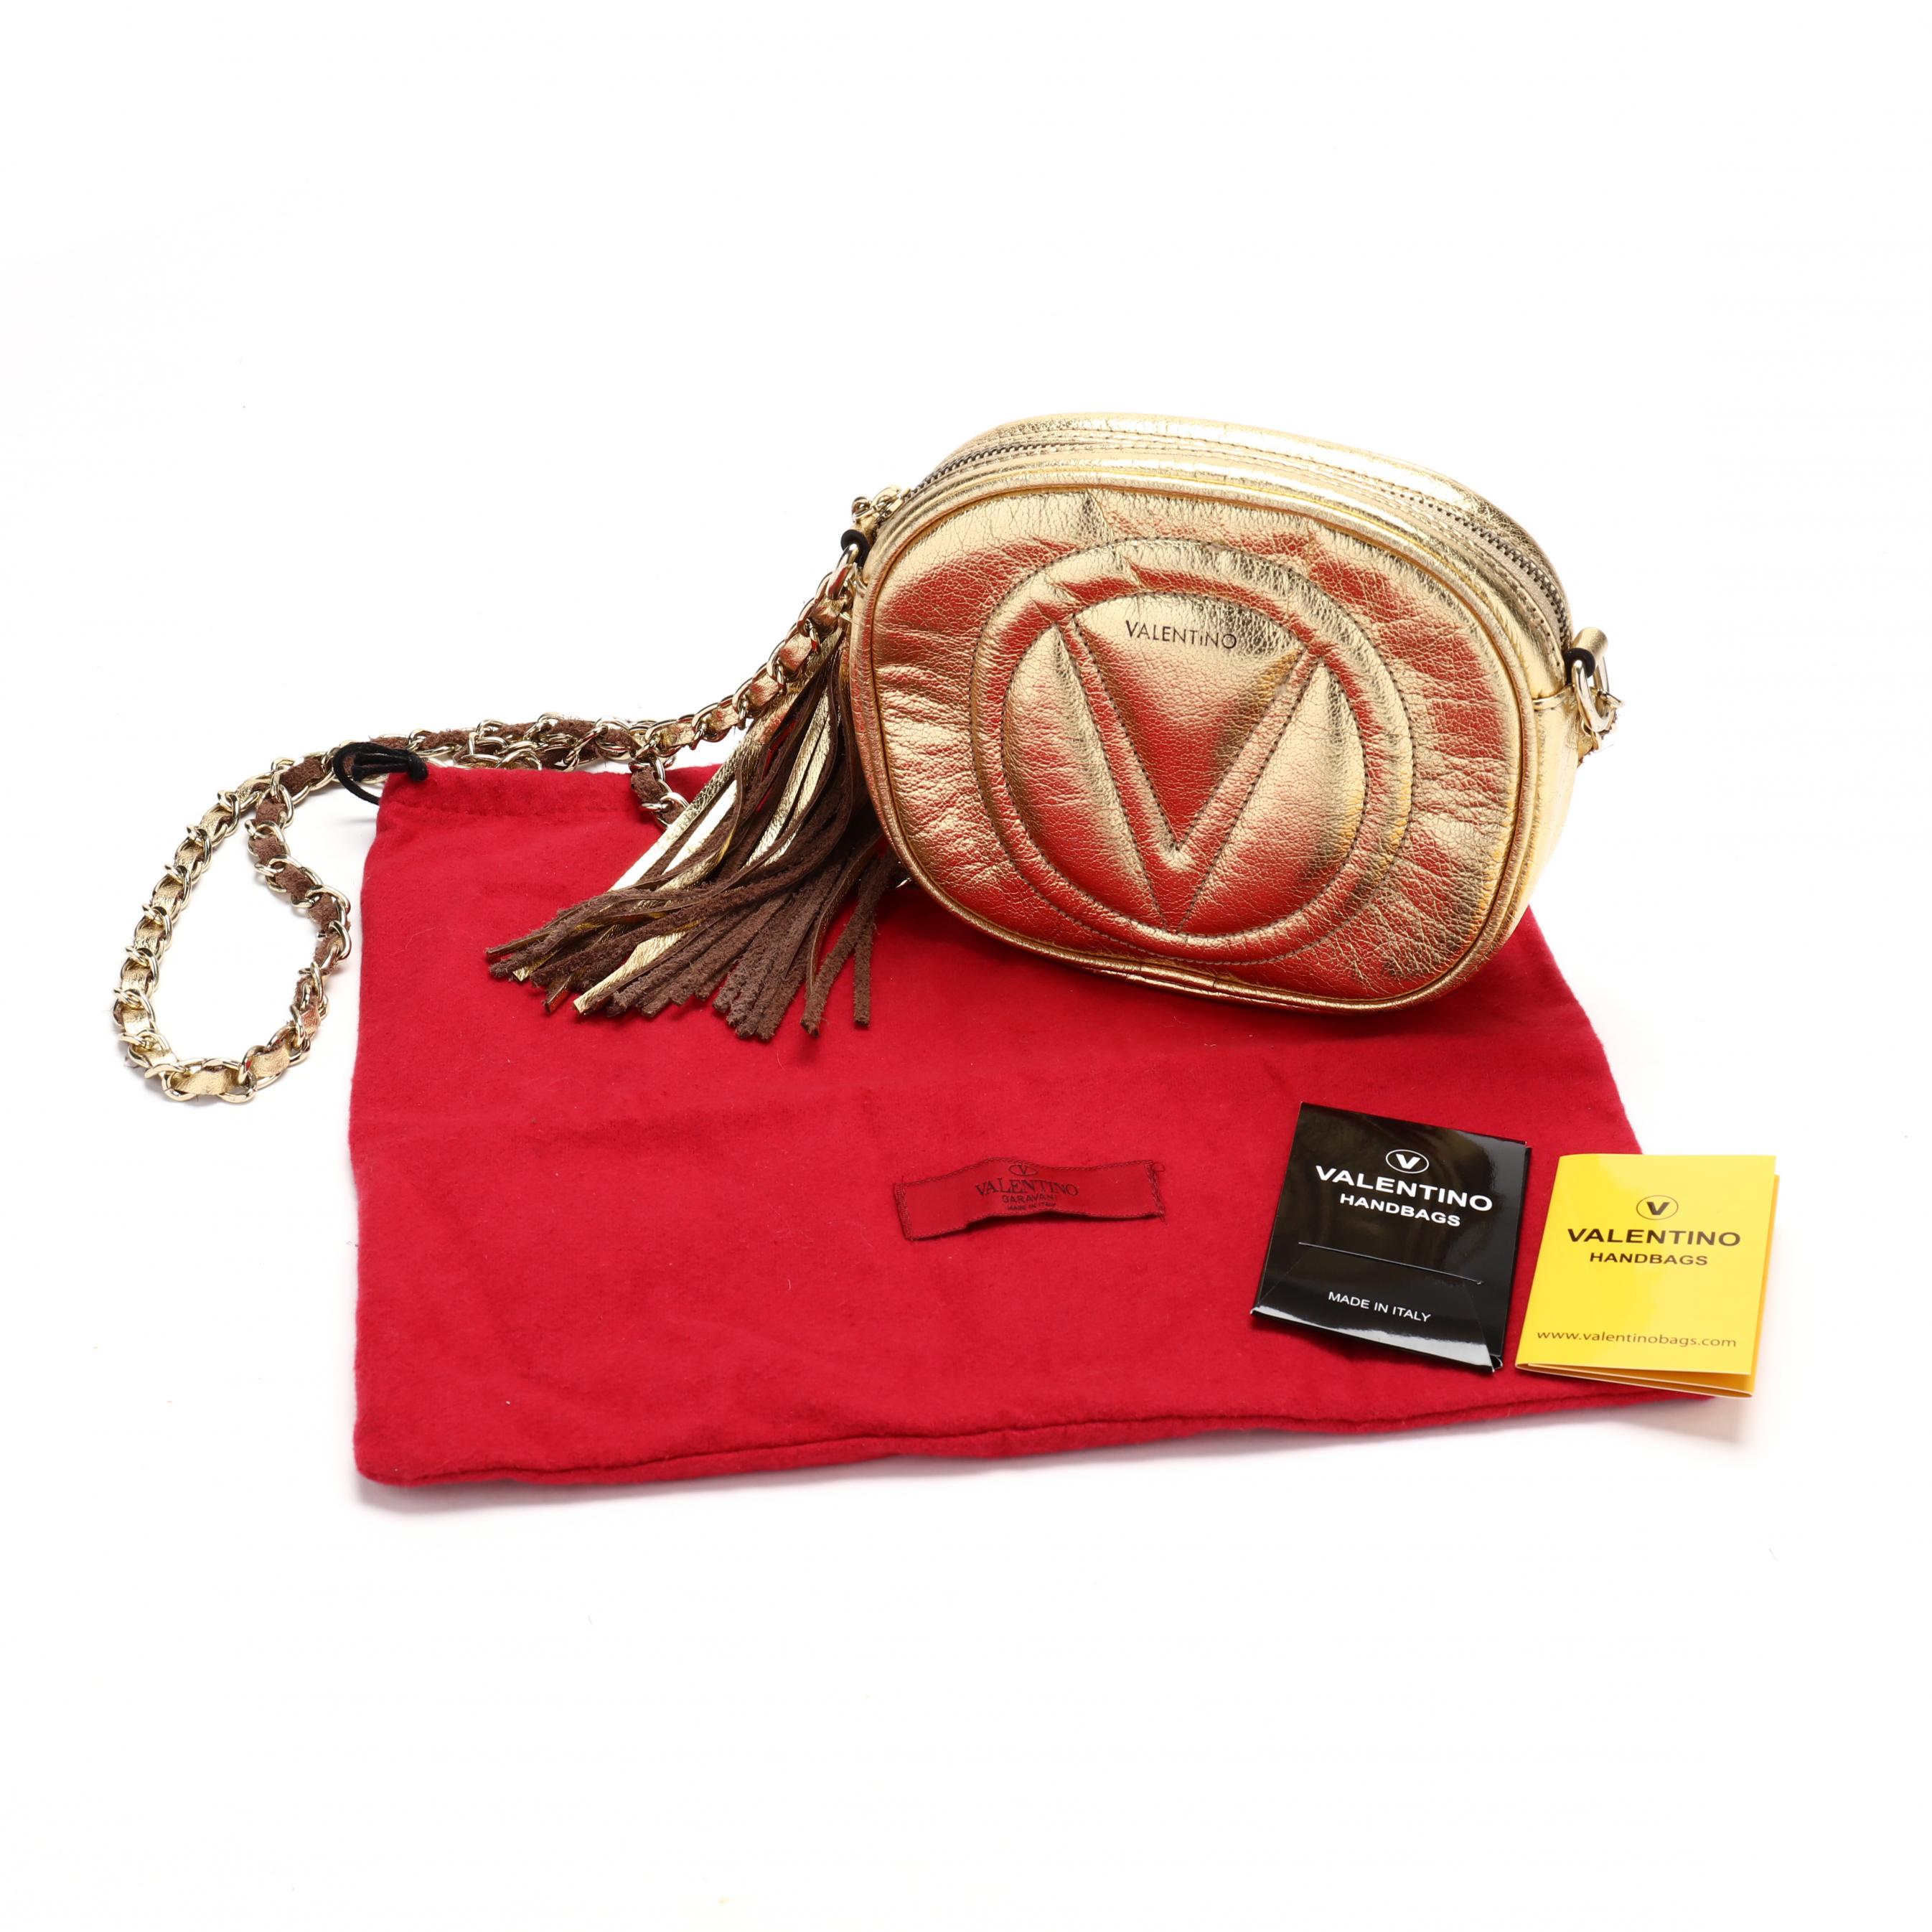 Metallic Gold Crossbody Bag, Mario Valentino Spa (Lot 1025 - Estate Jewelry  & FashionSep 15, 2022, 10:00am)